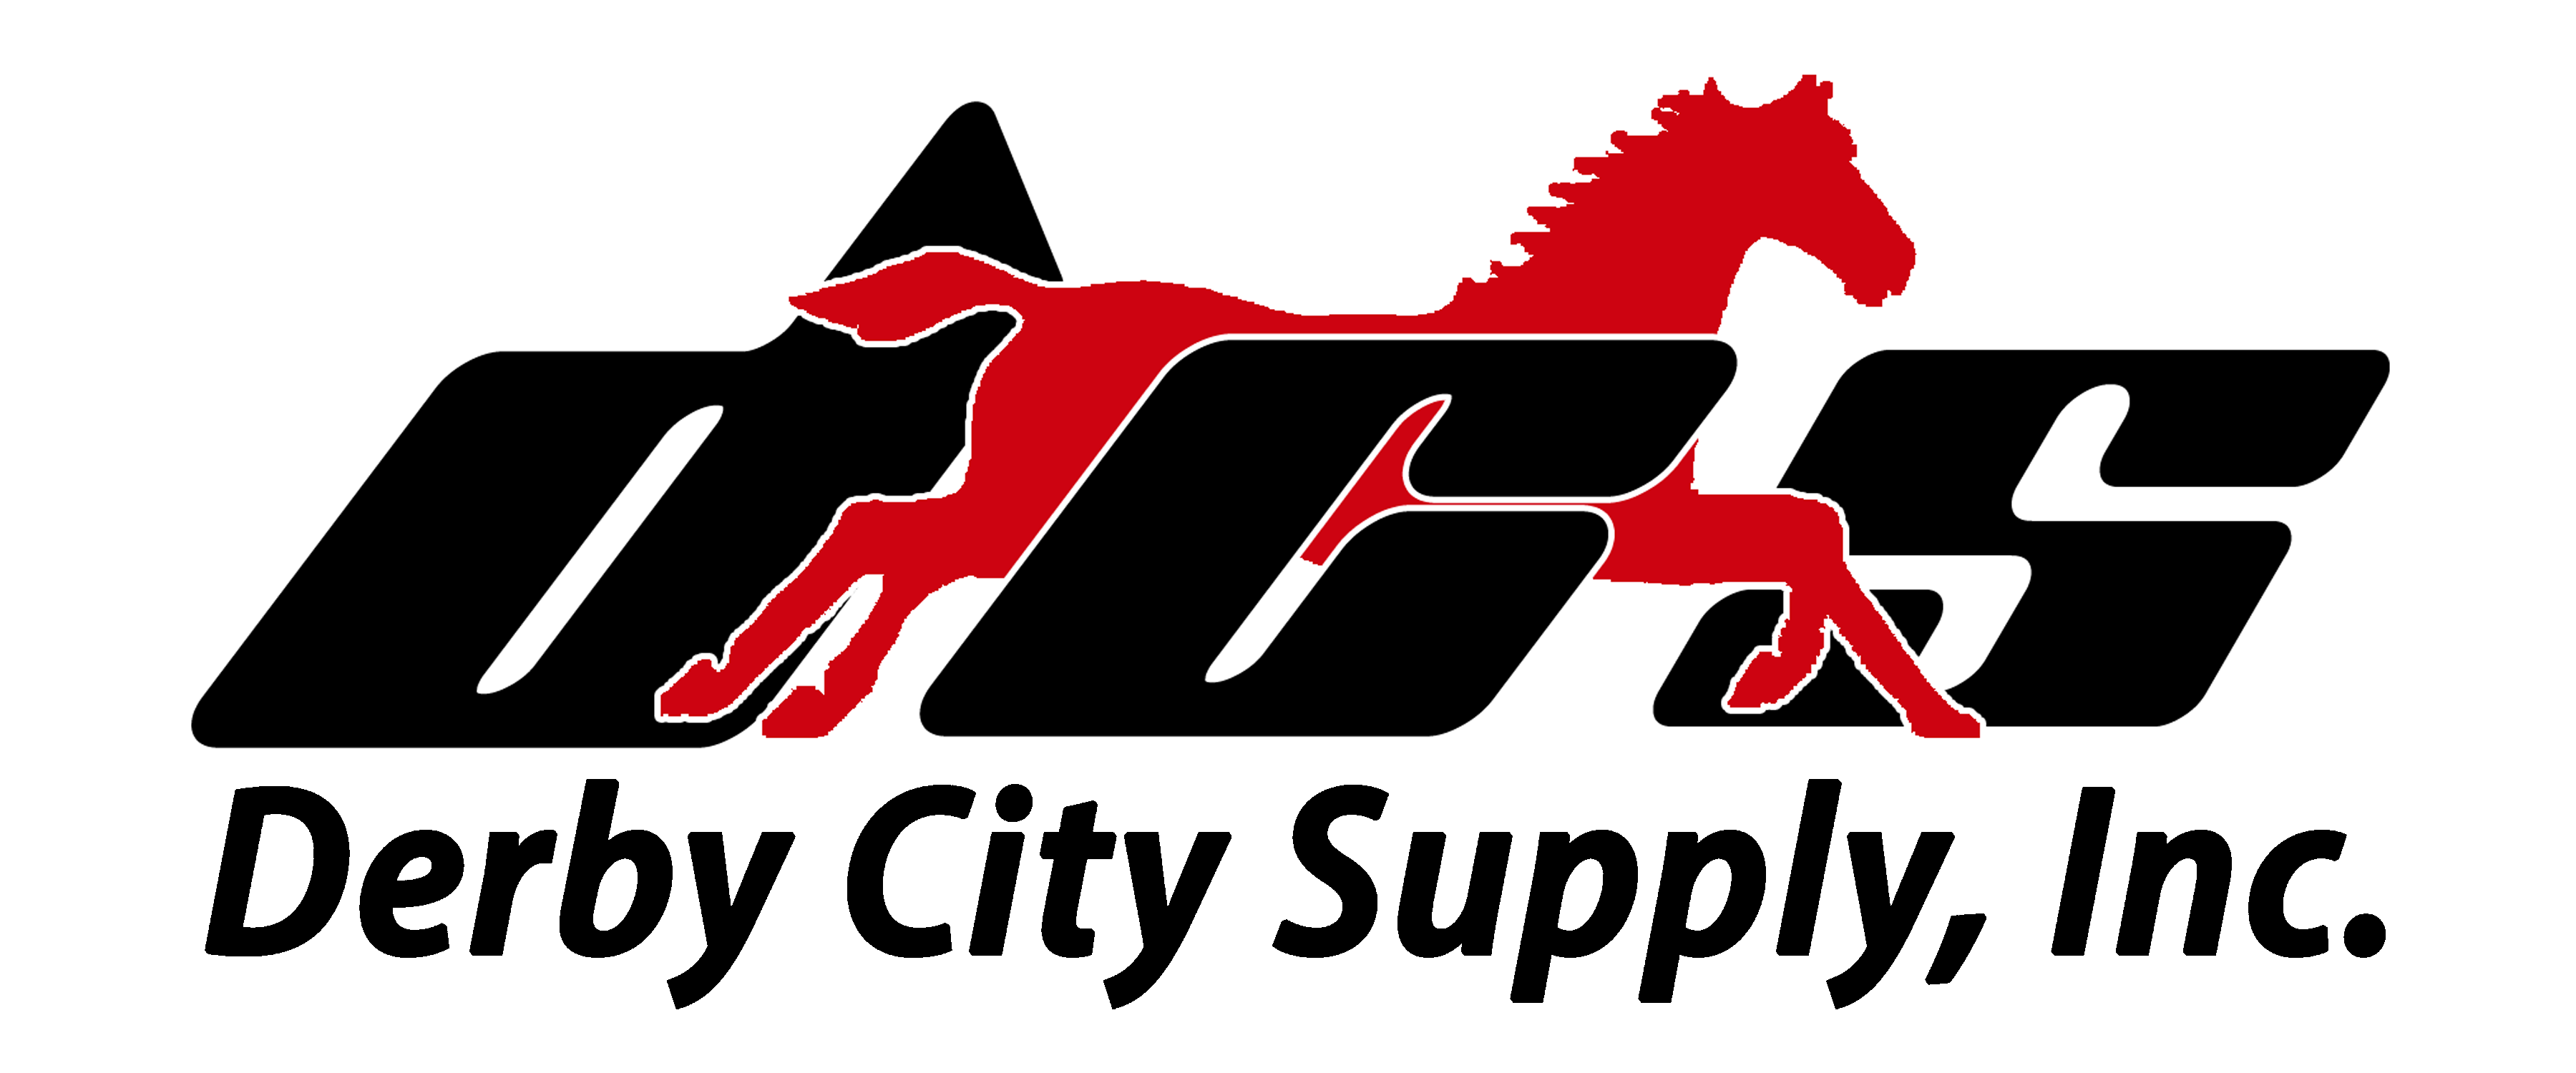 Derby City Supply, Inc.